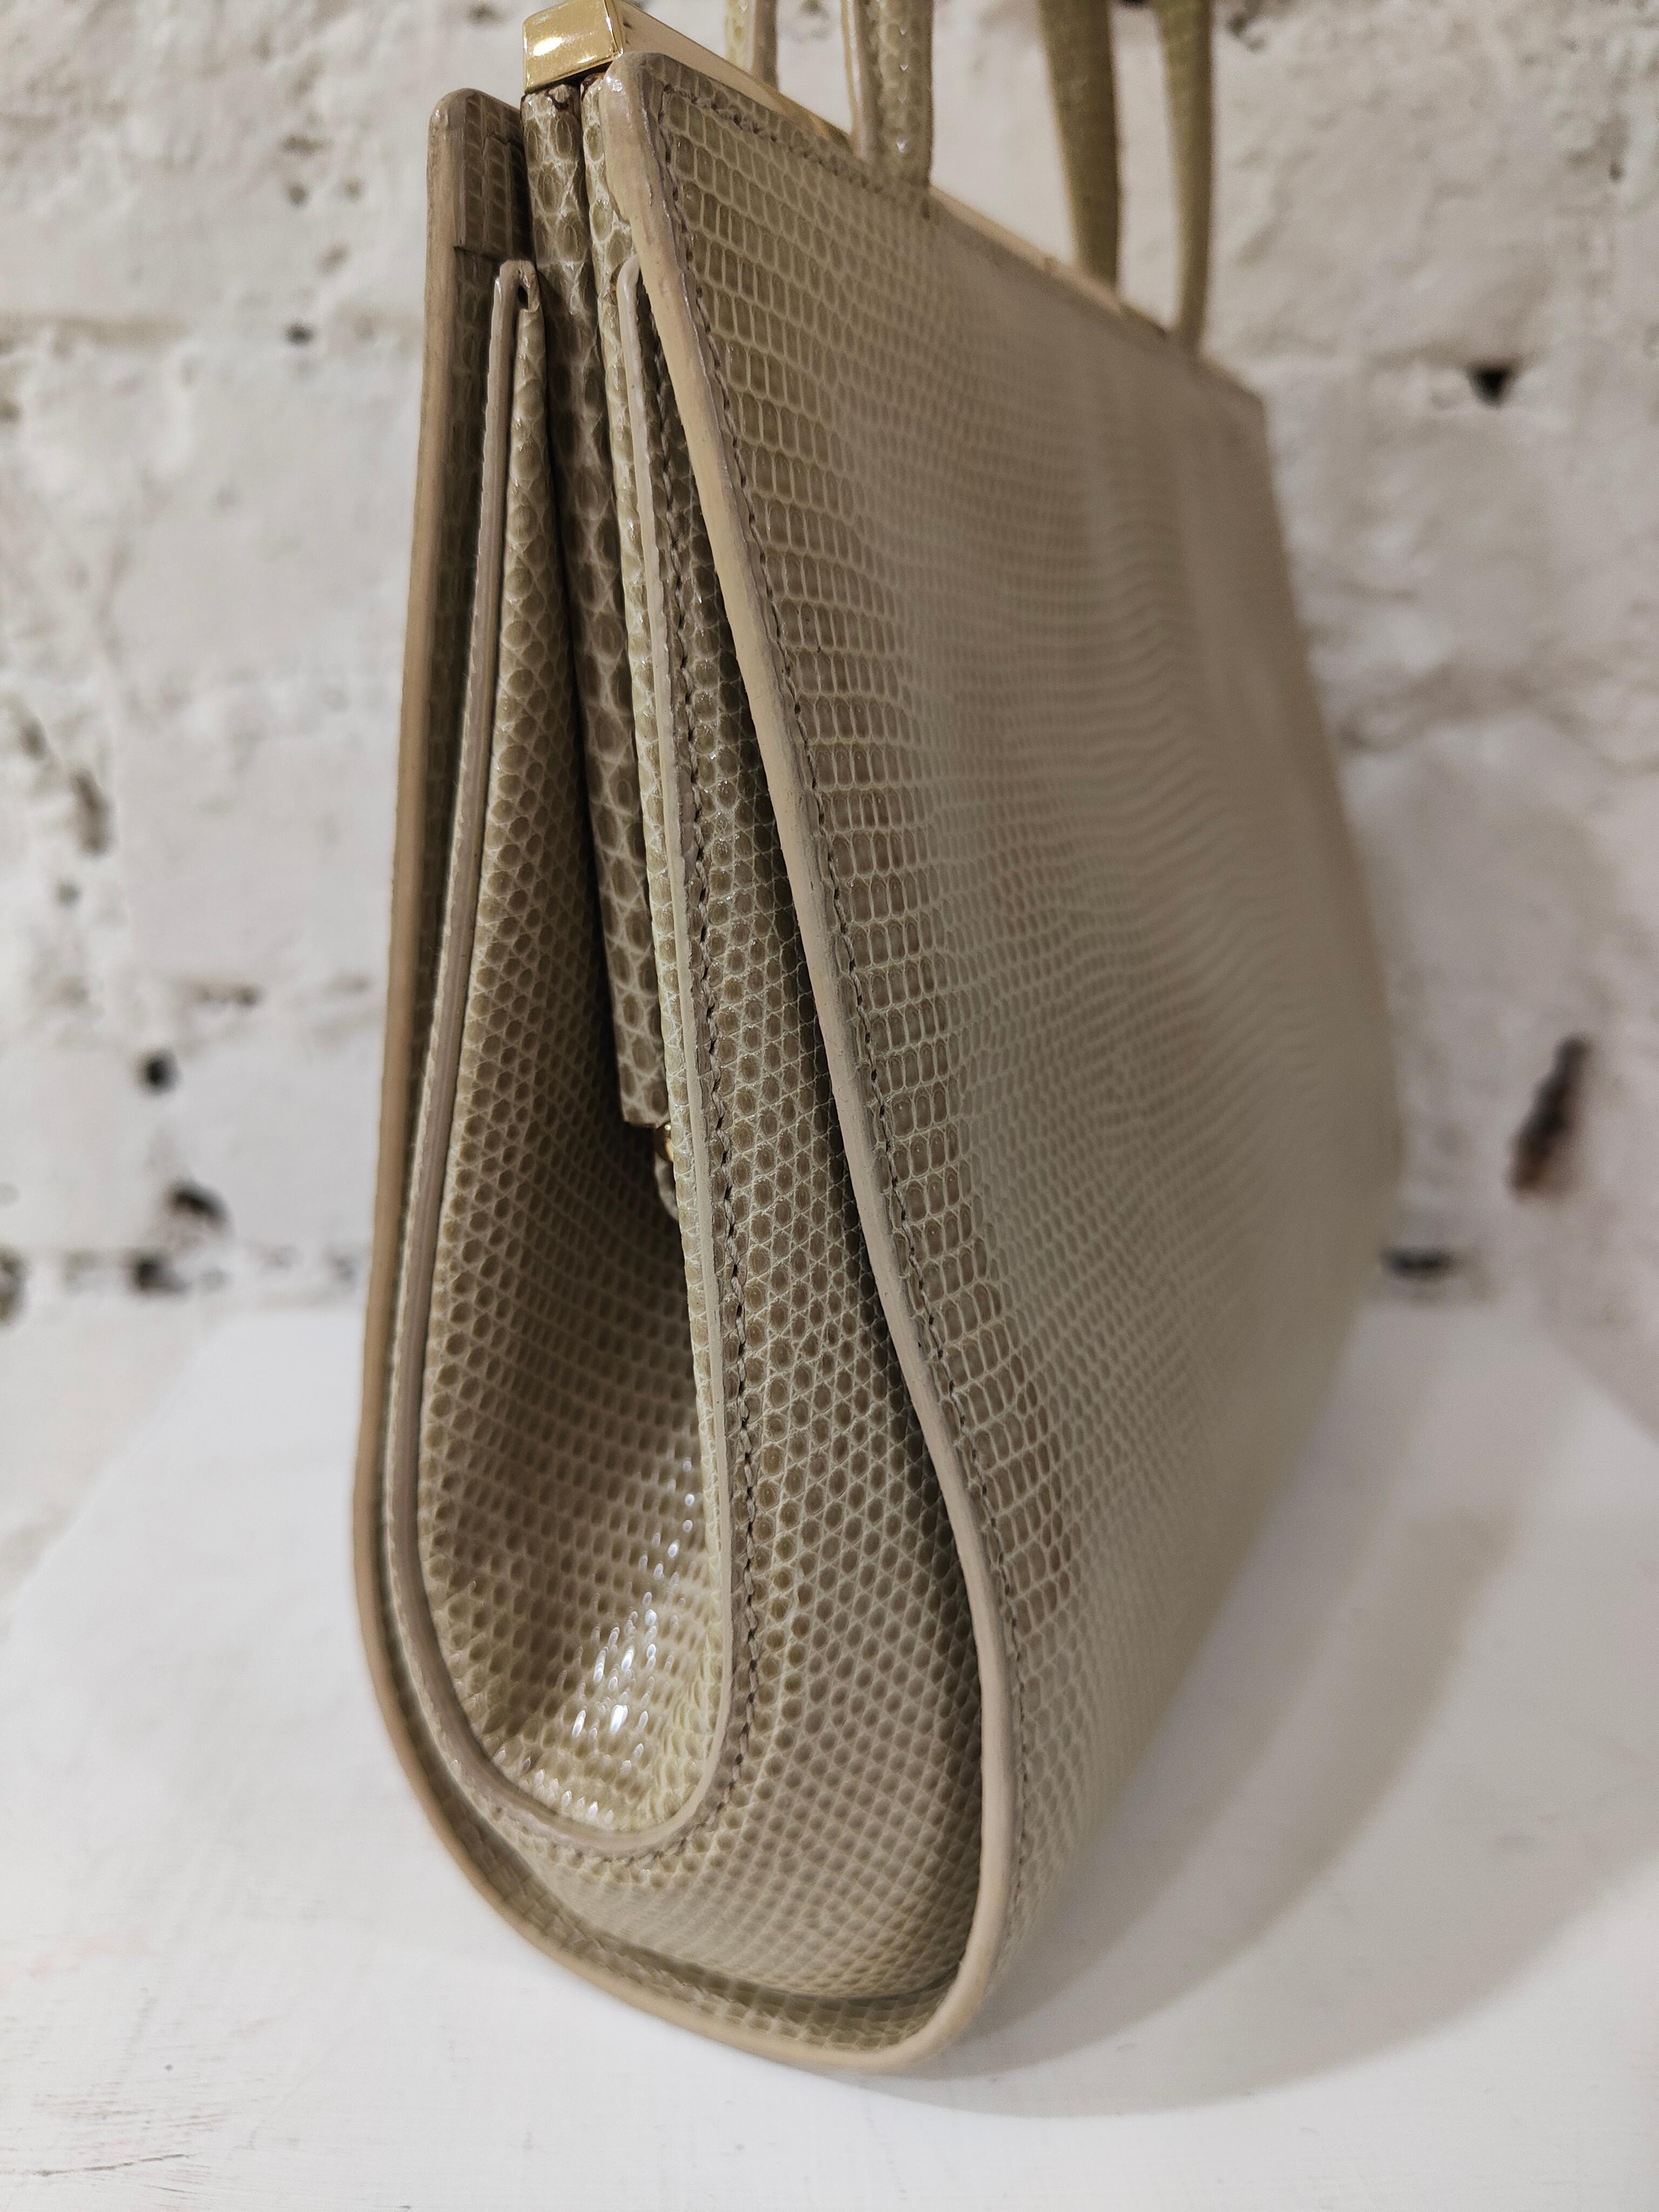 Valextra reptile beige leather handle bag
measurements: 19 x 22 cm